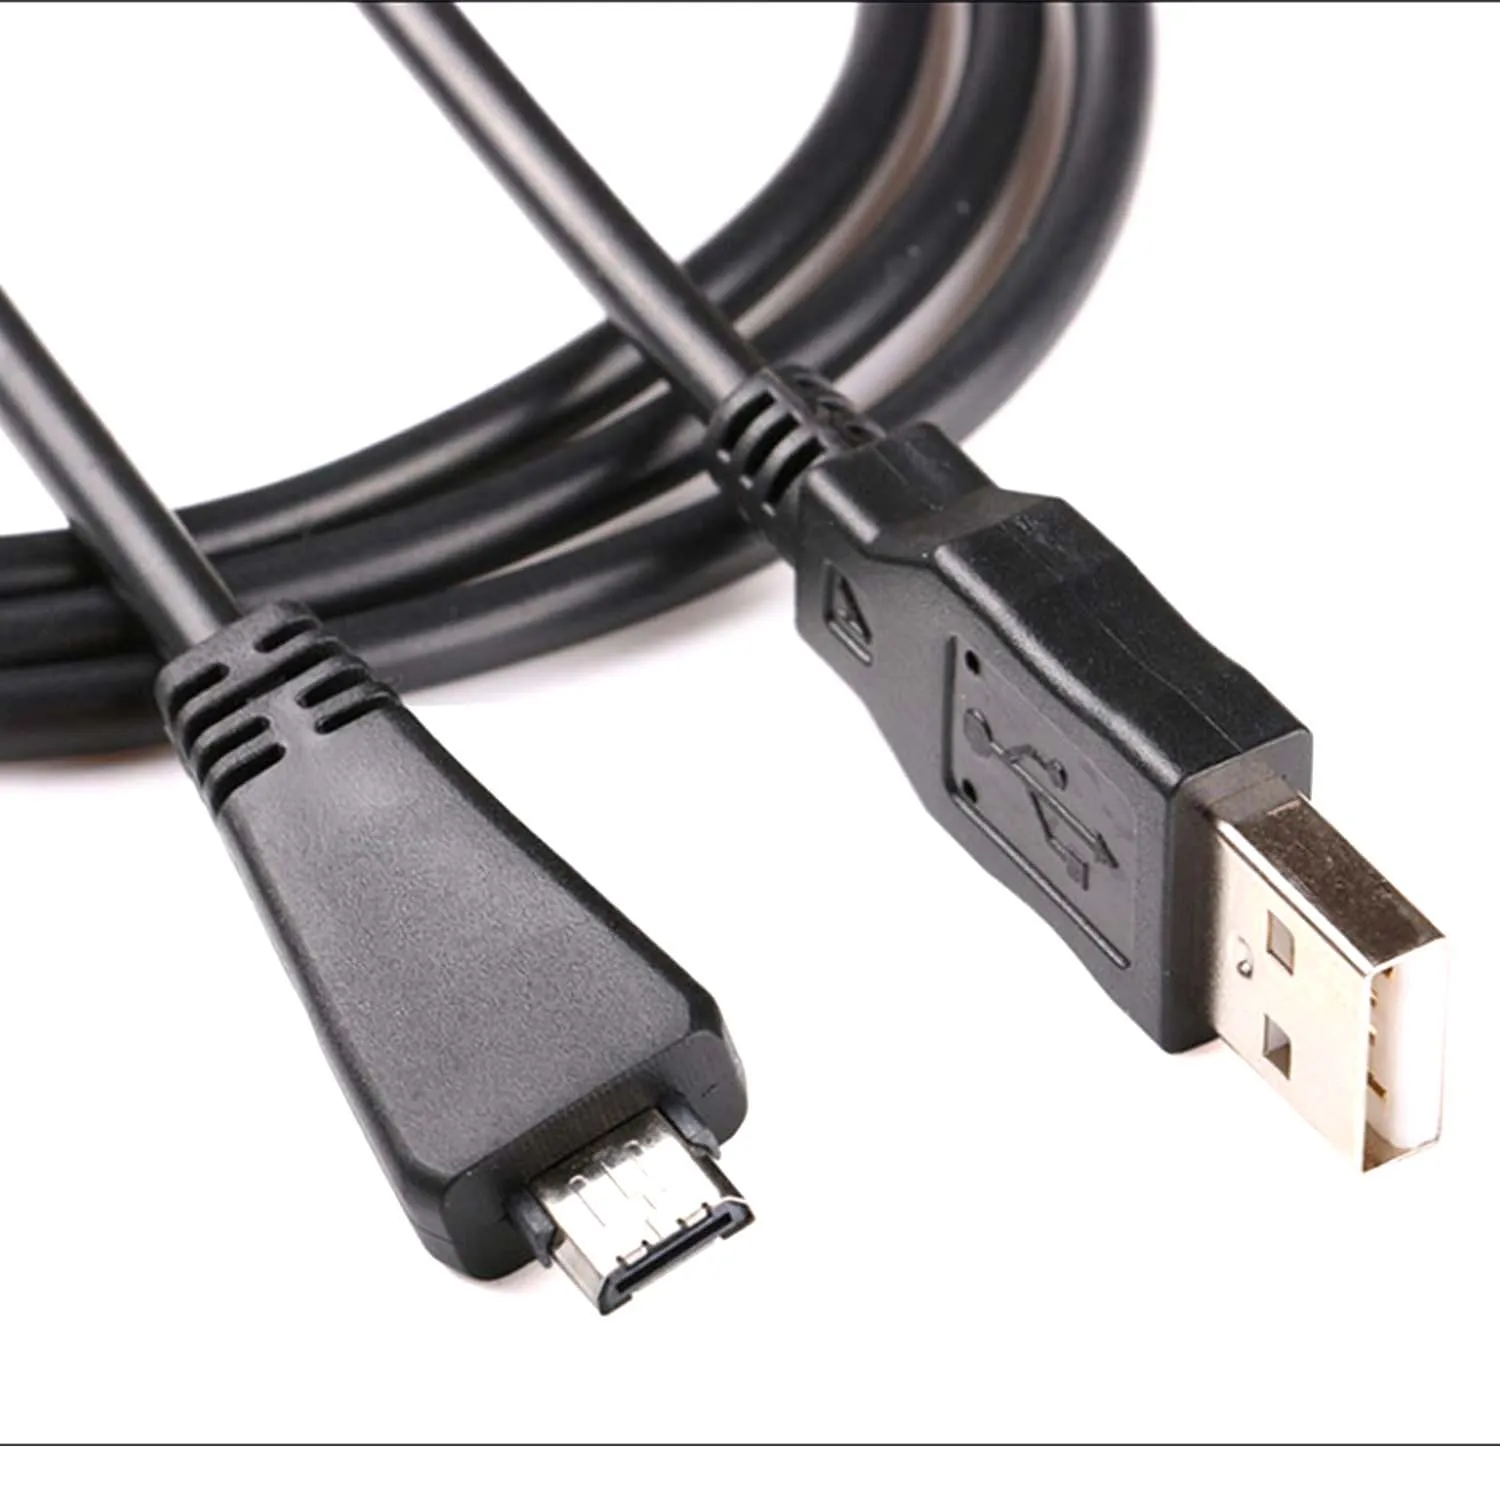 Cable de datos USB, accesorio para Sony VMC-MD3 T110 T110/B T110/R T110/P...